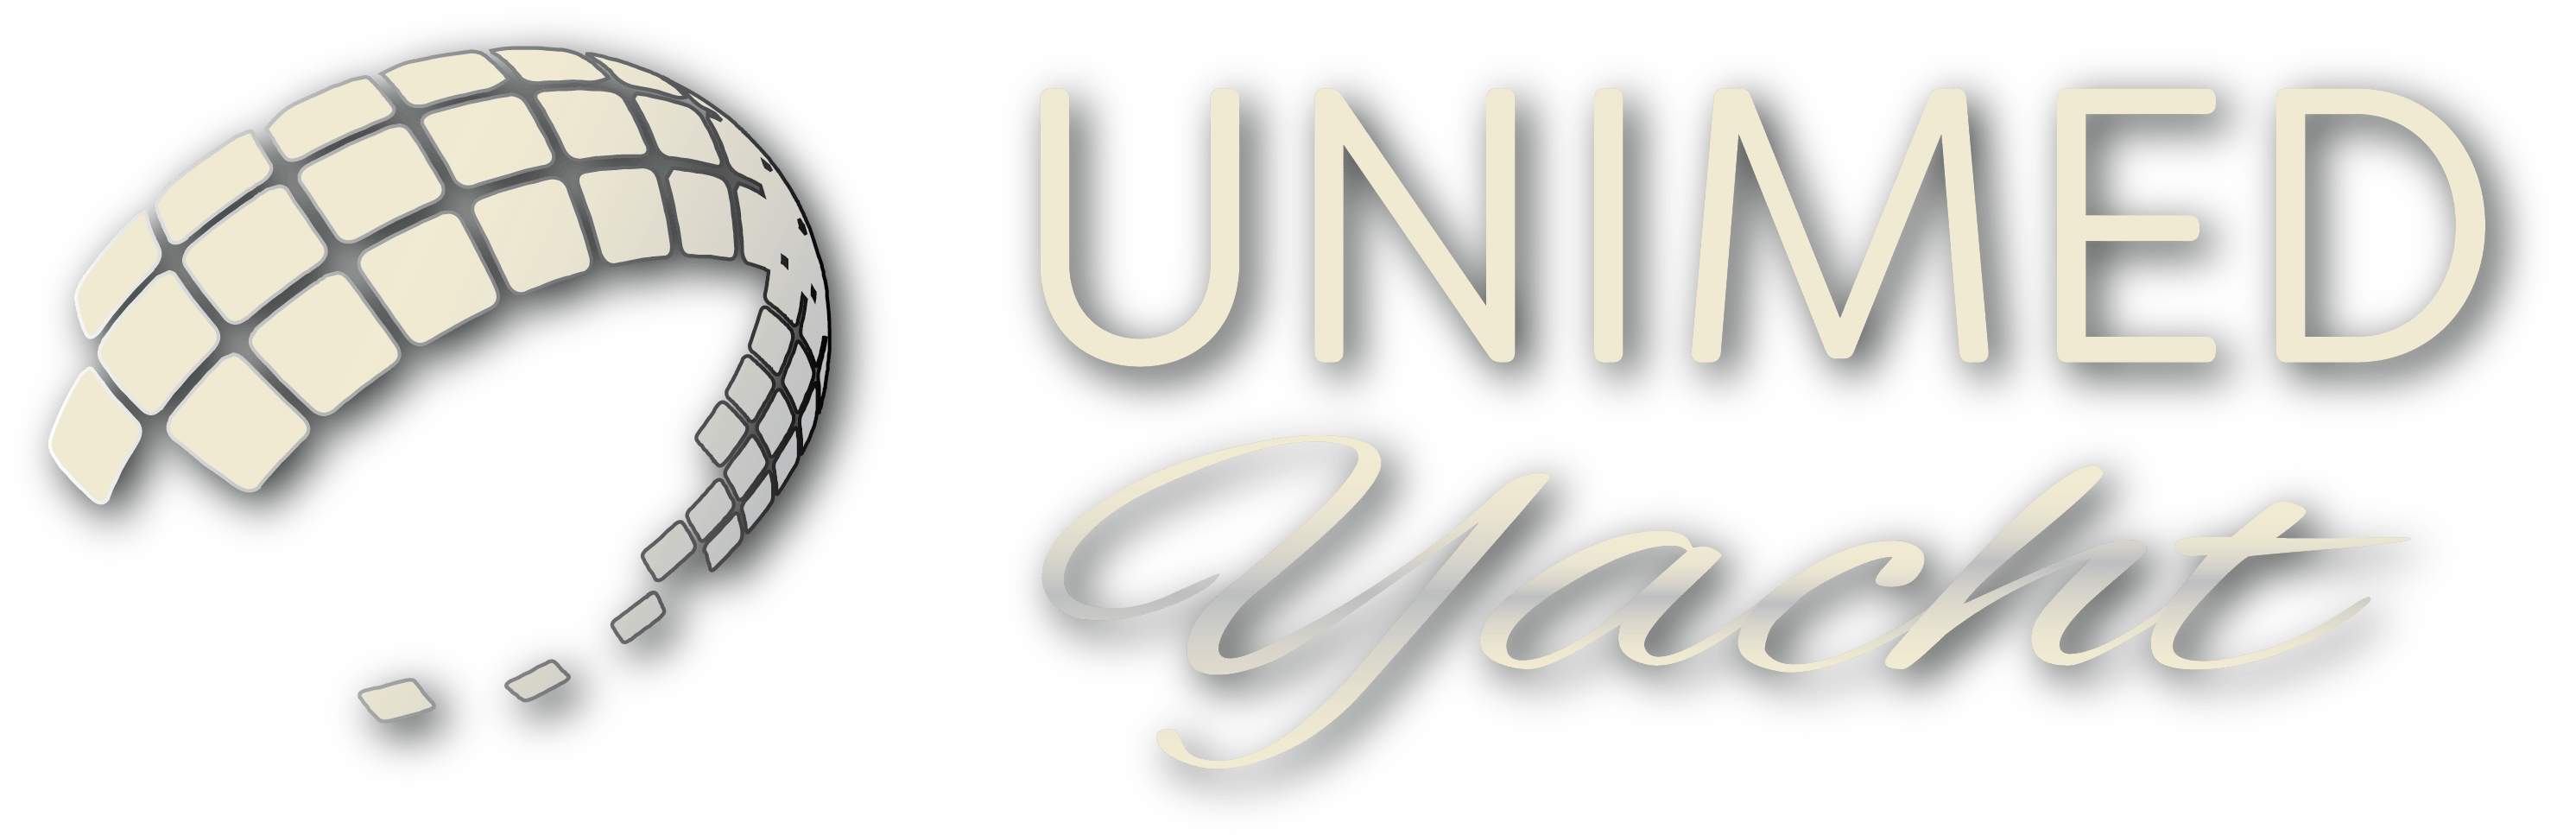 unimed logos-gold-42